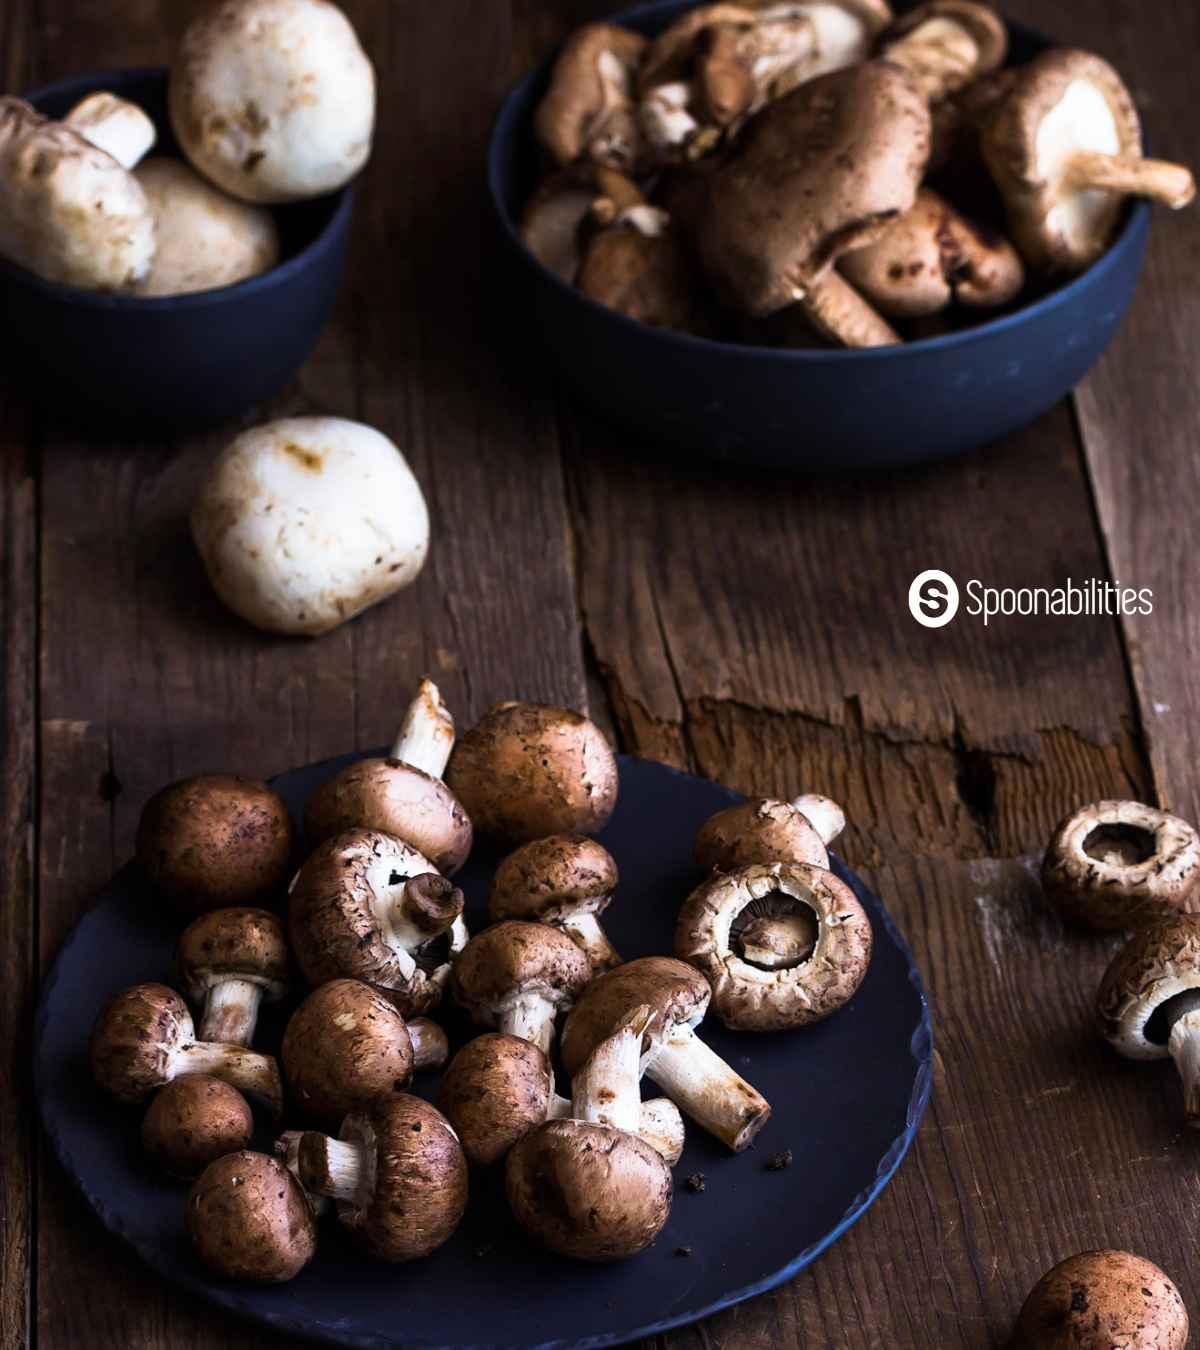 Shiitake mushrooms, cremini mushrooms and white mushrooms on a blue plate and wood table